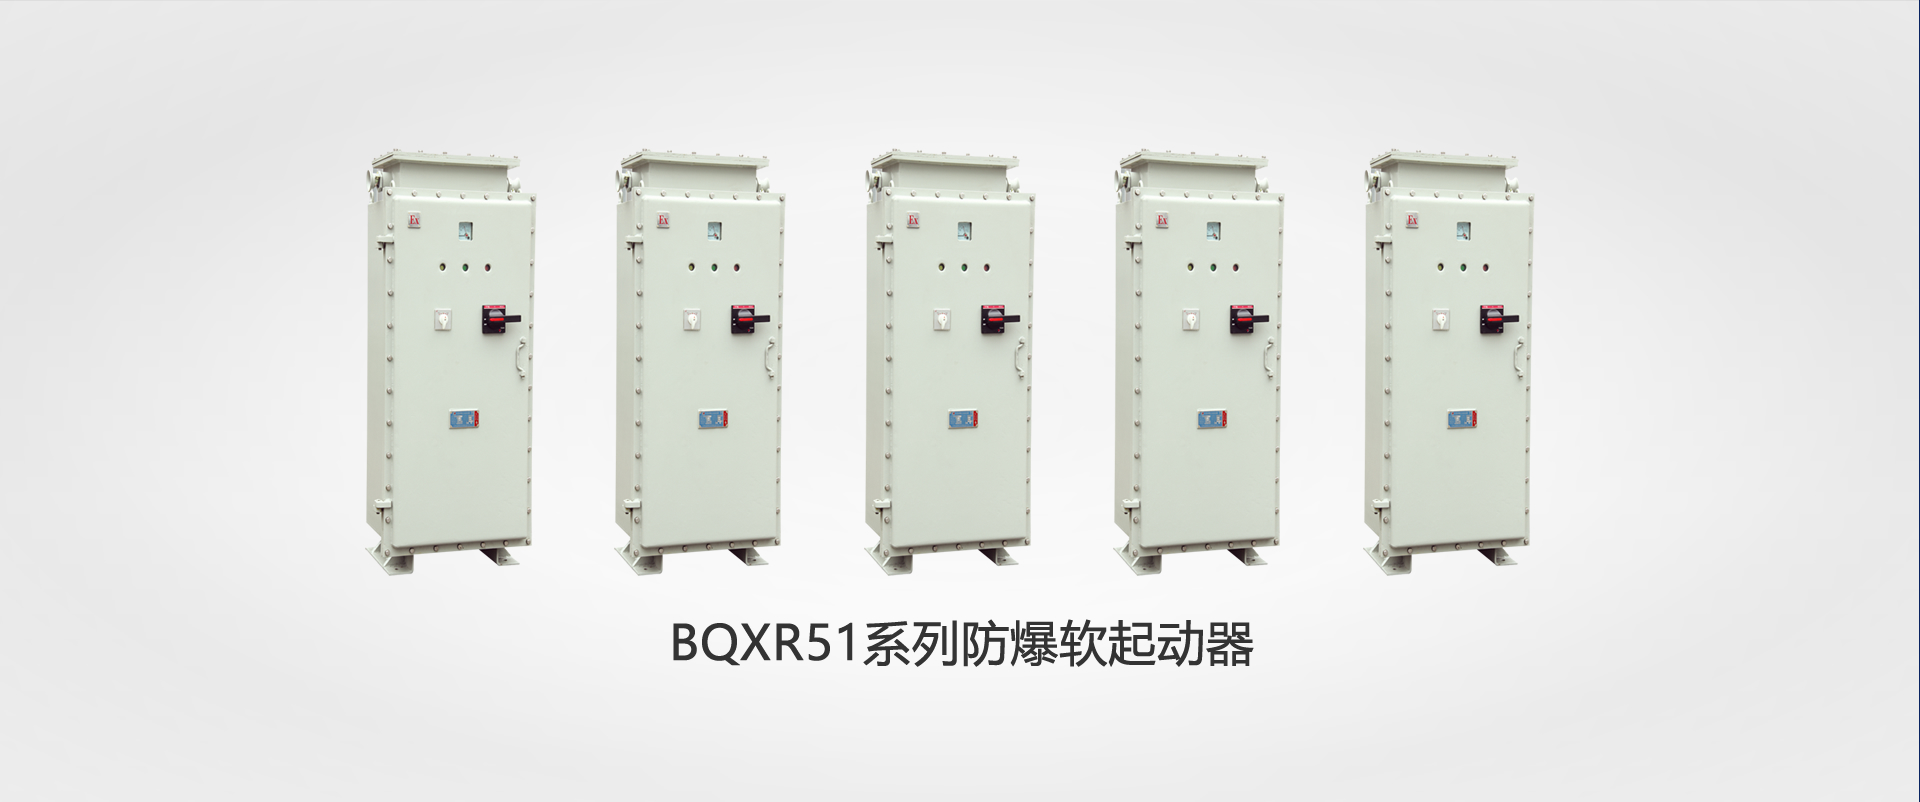 BQXR51系(xi)列防爆軟起動器(qi)